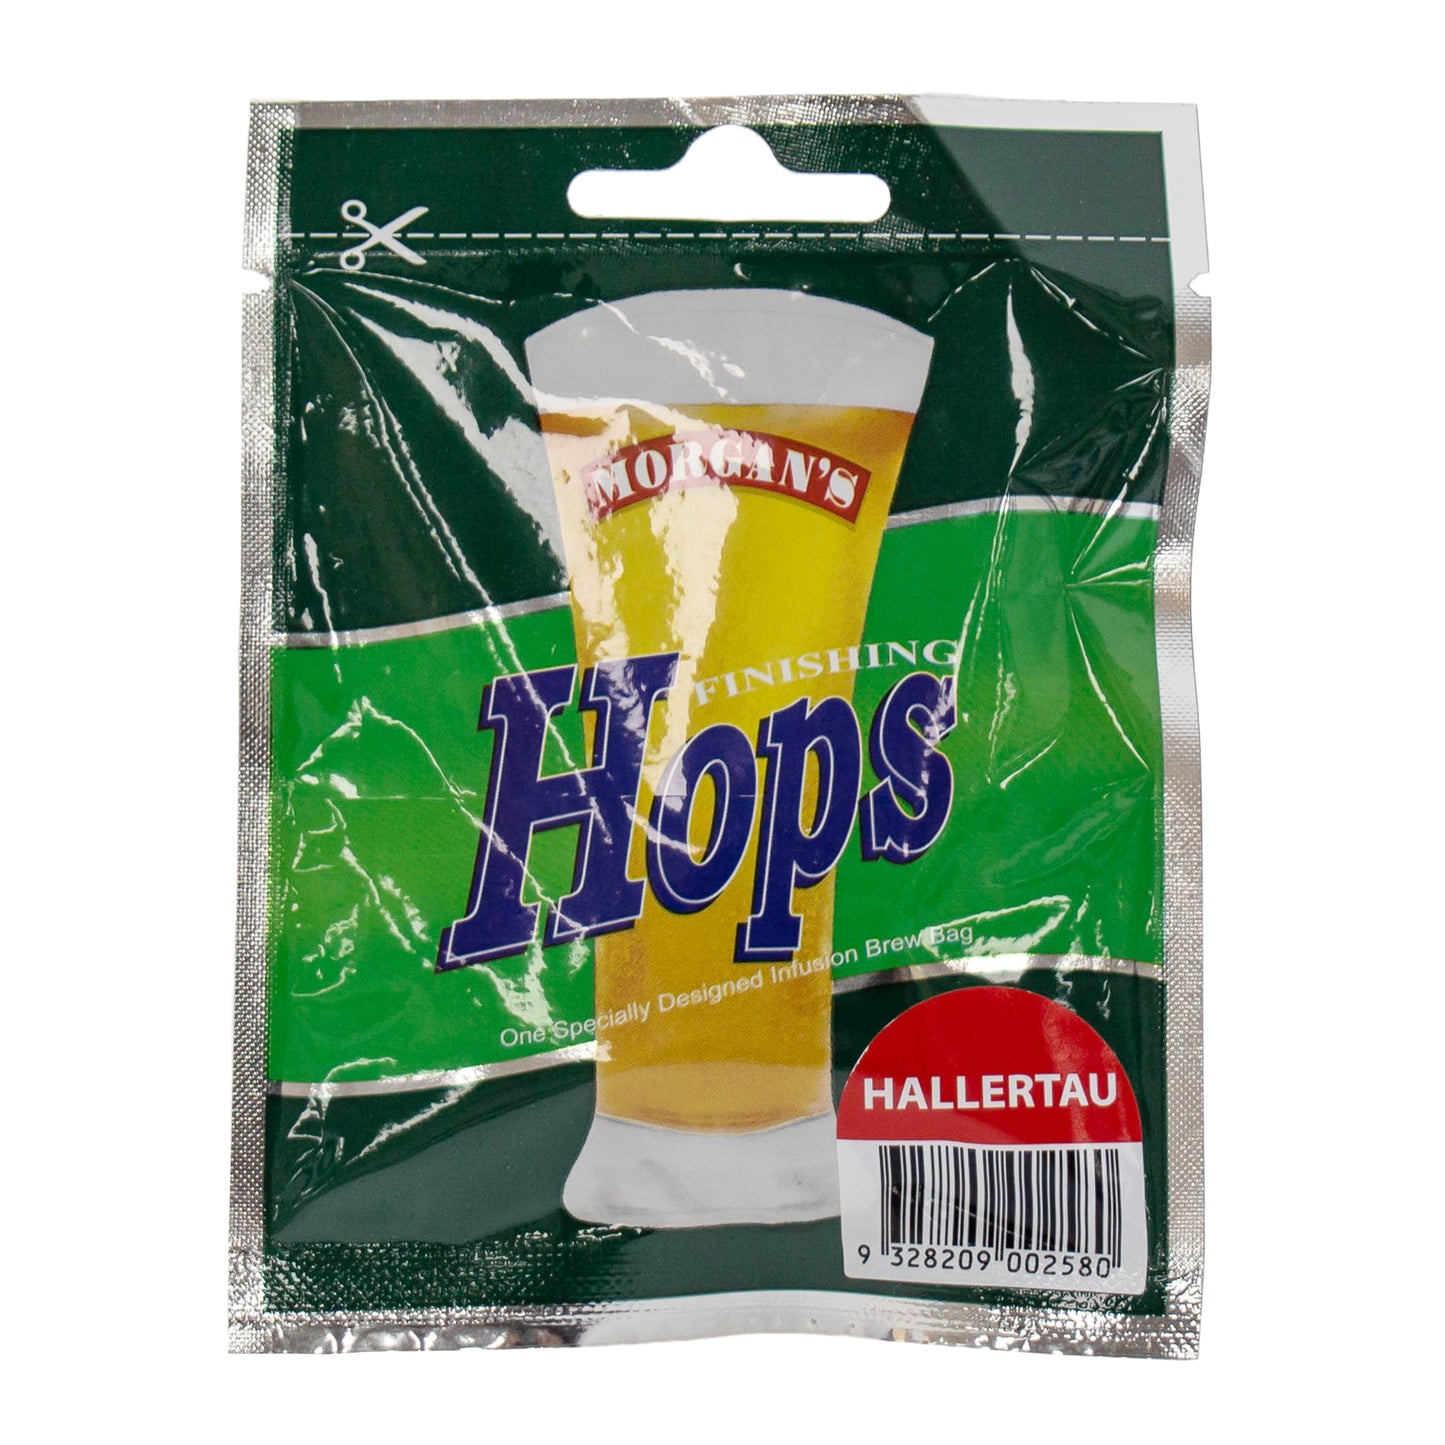 12g packet of Hallertau hops for home brewing